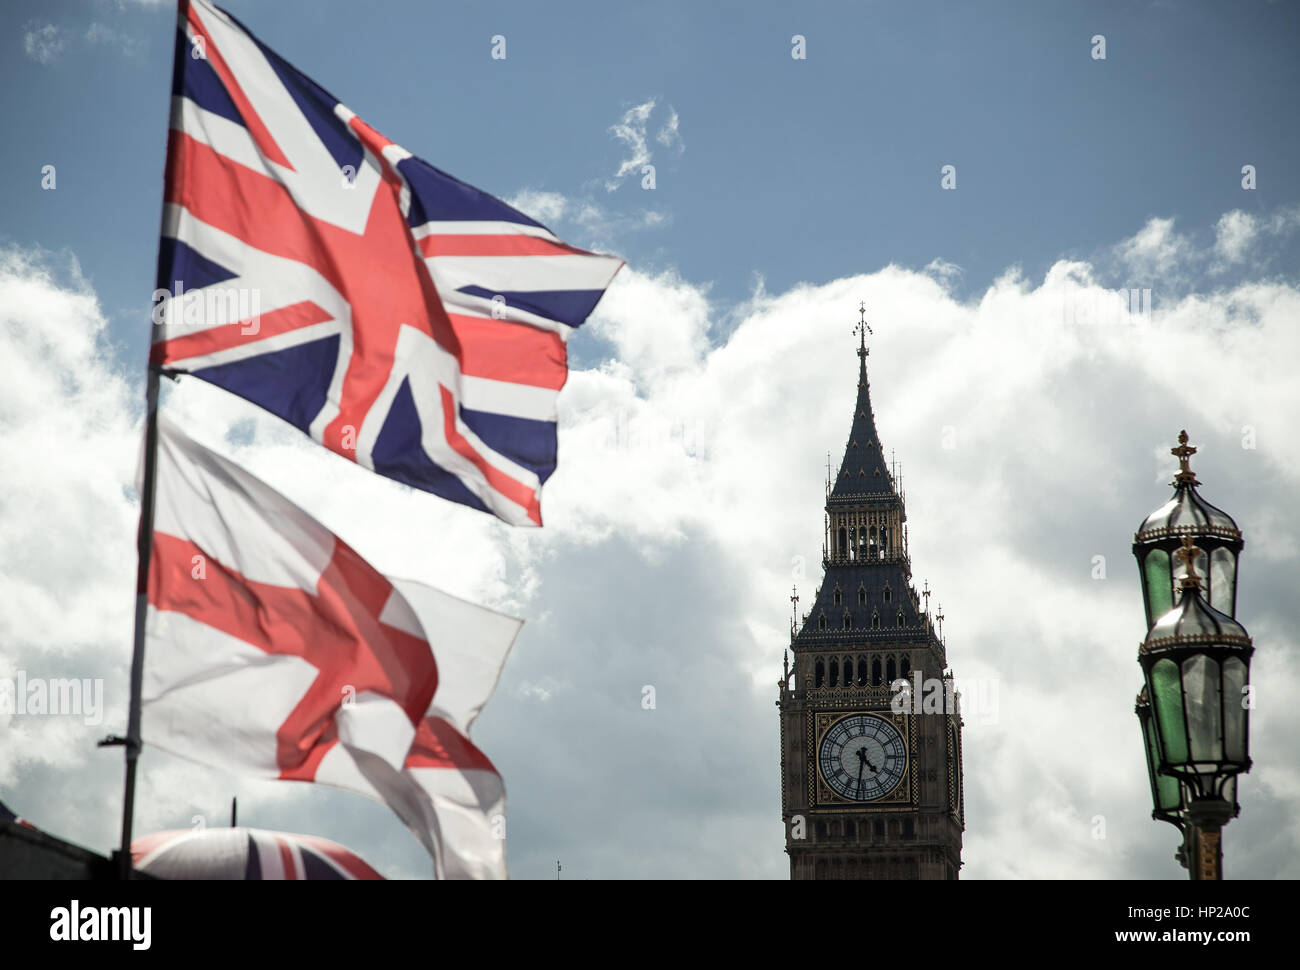 Closeup of Union Jack flag. UK Flag. British Union Jack flag blowing in the wind. Stock Photo